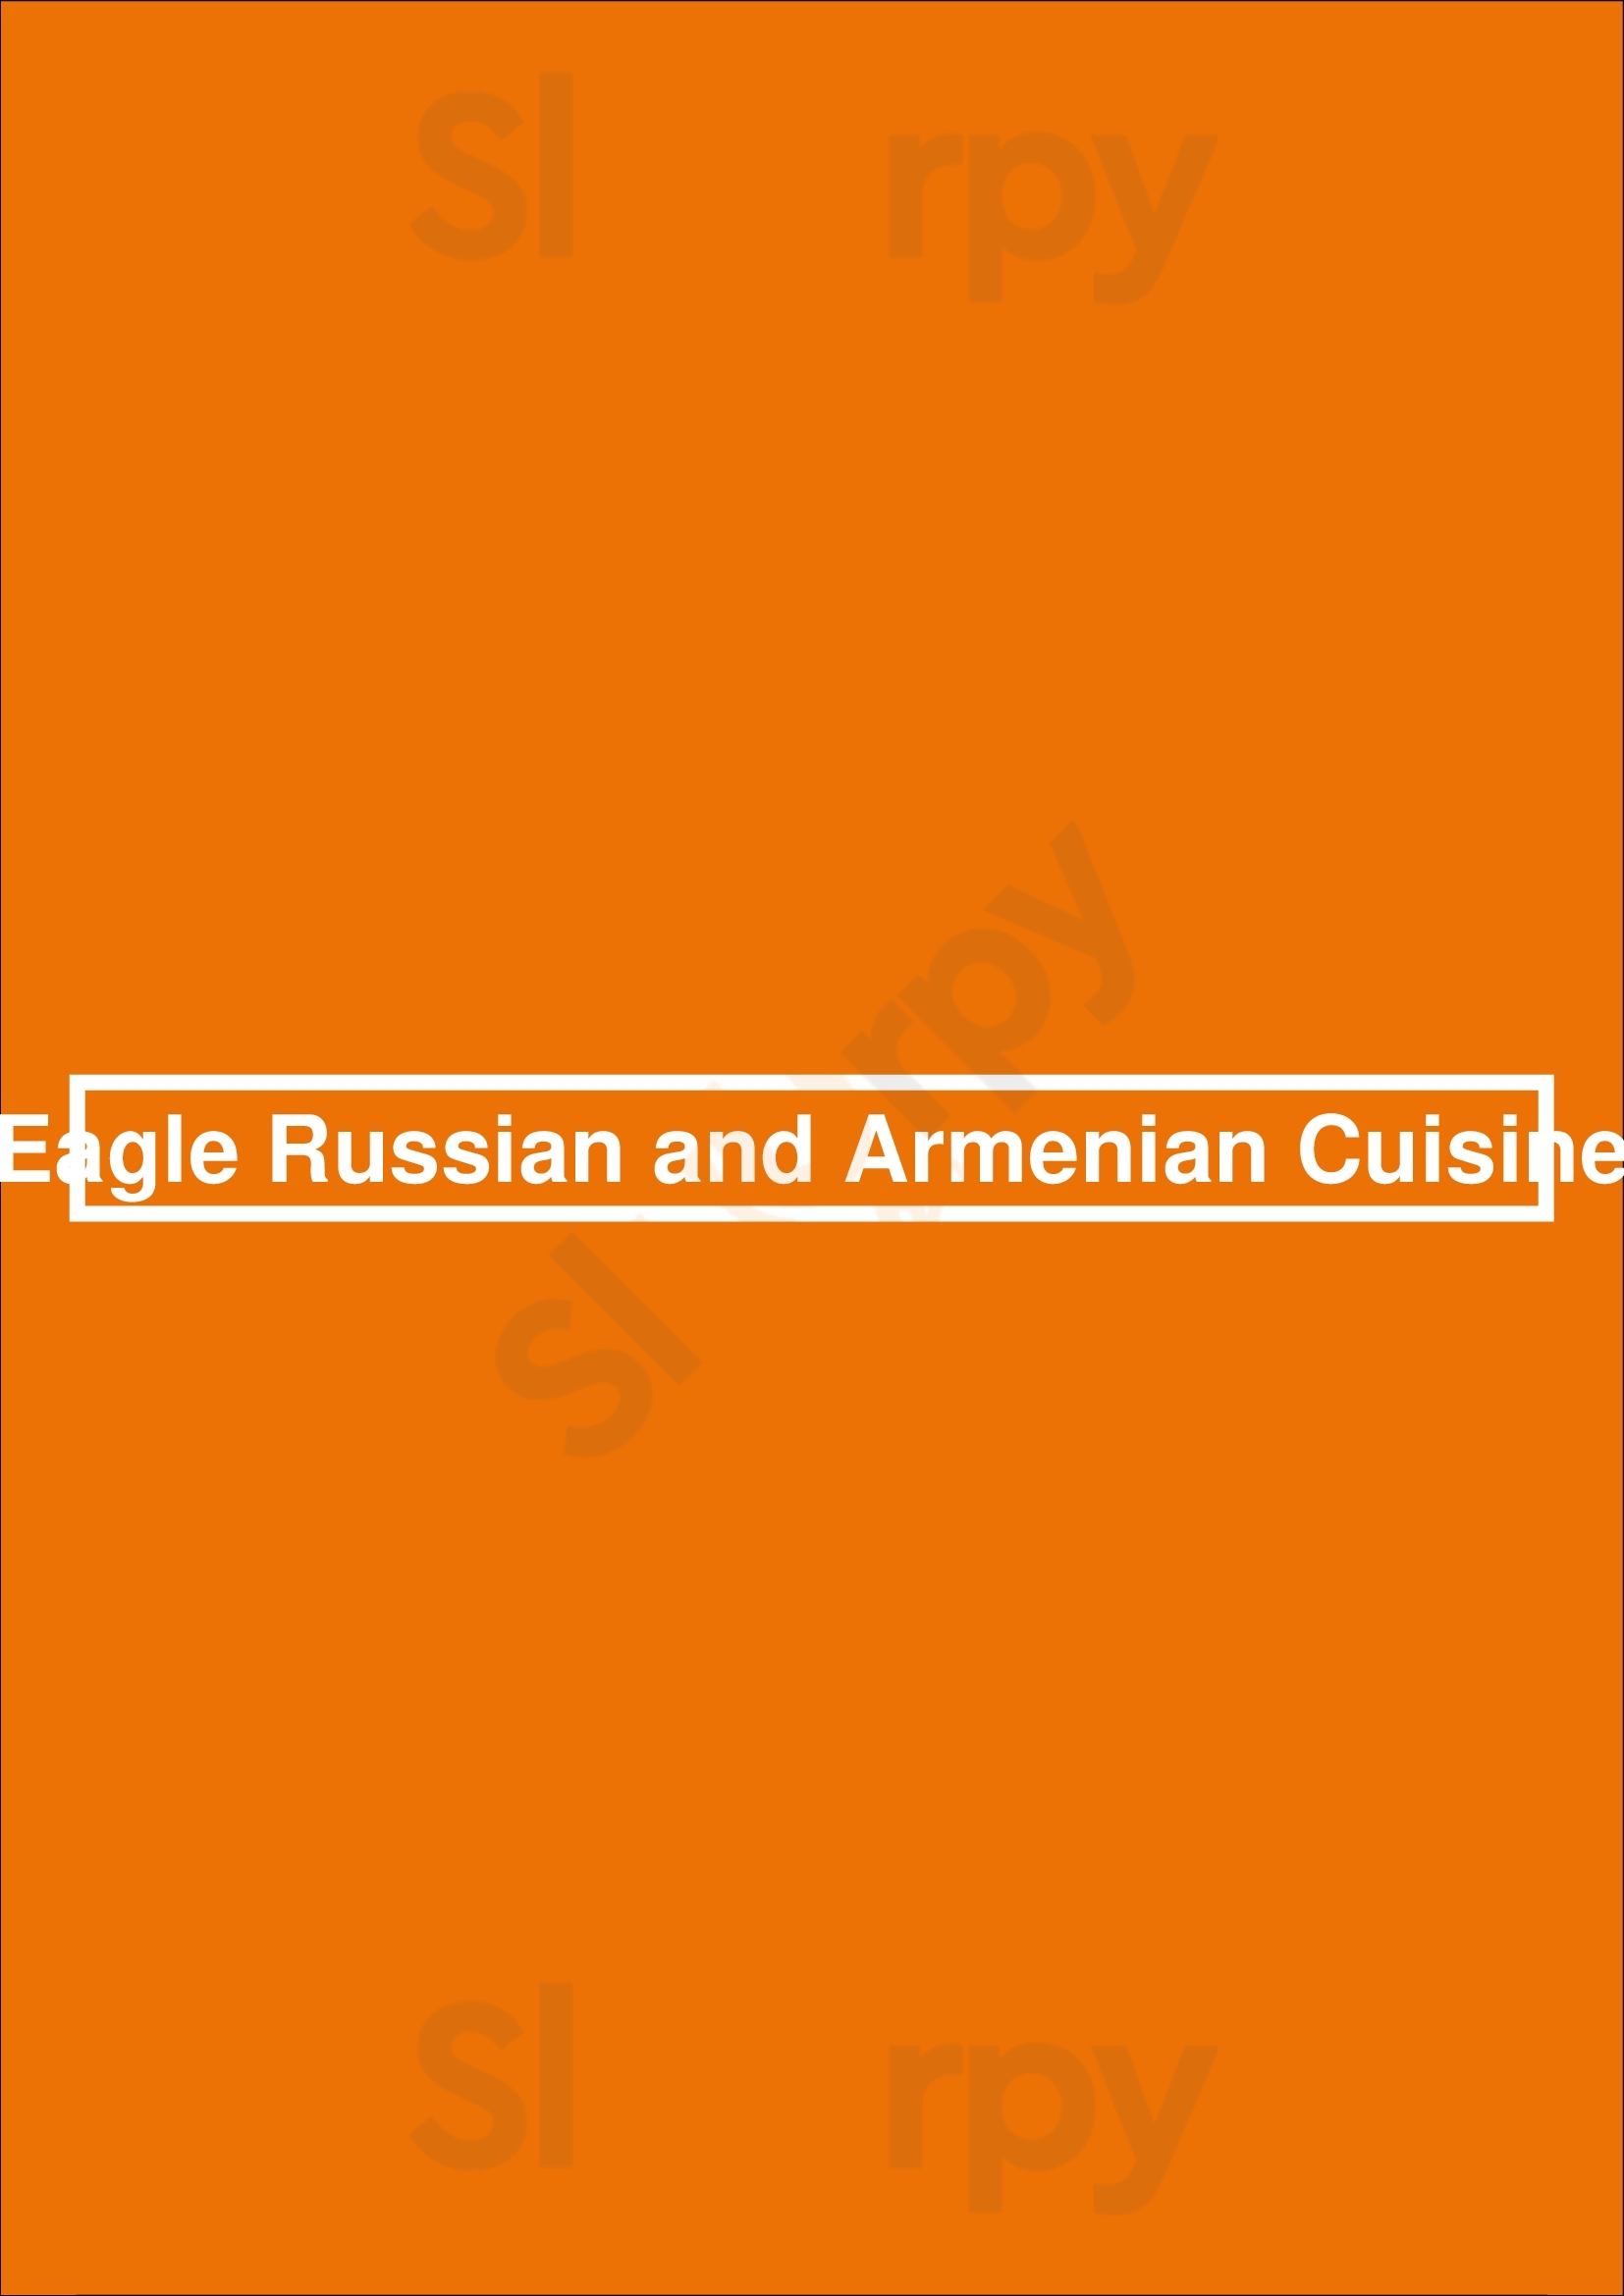 Eagle Russian And Armenian Cuisine Los Angeles Menu - 1